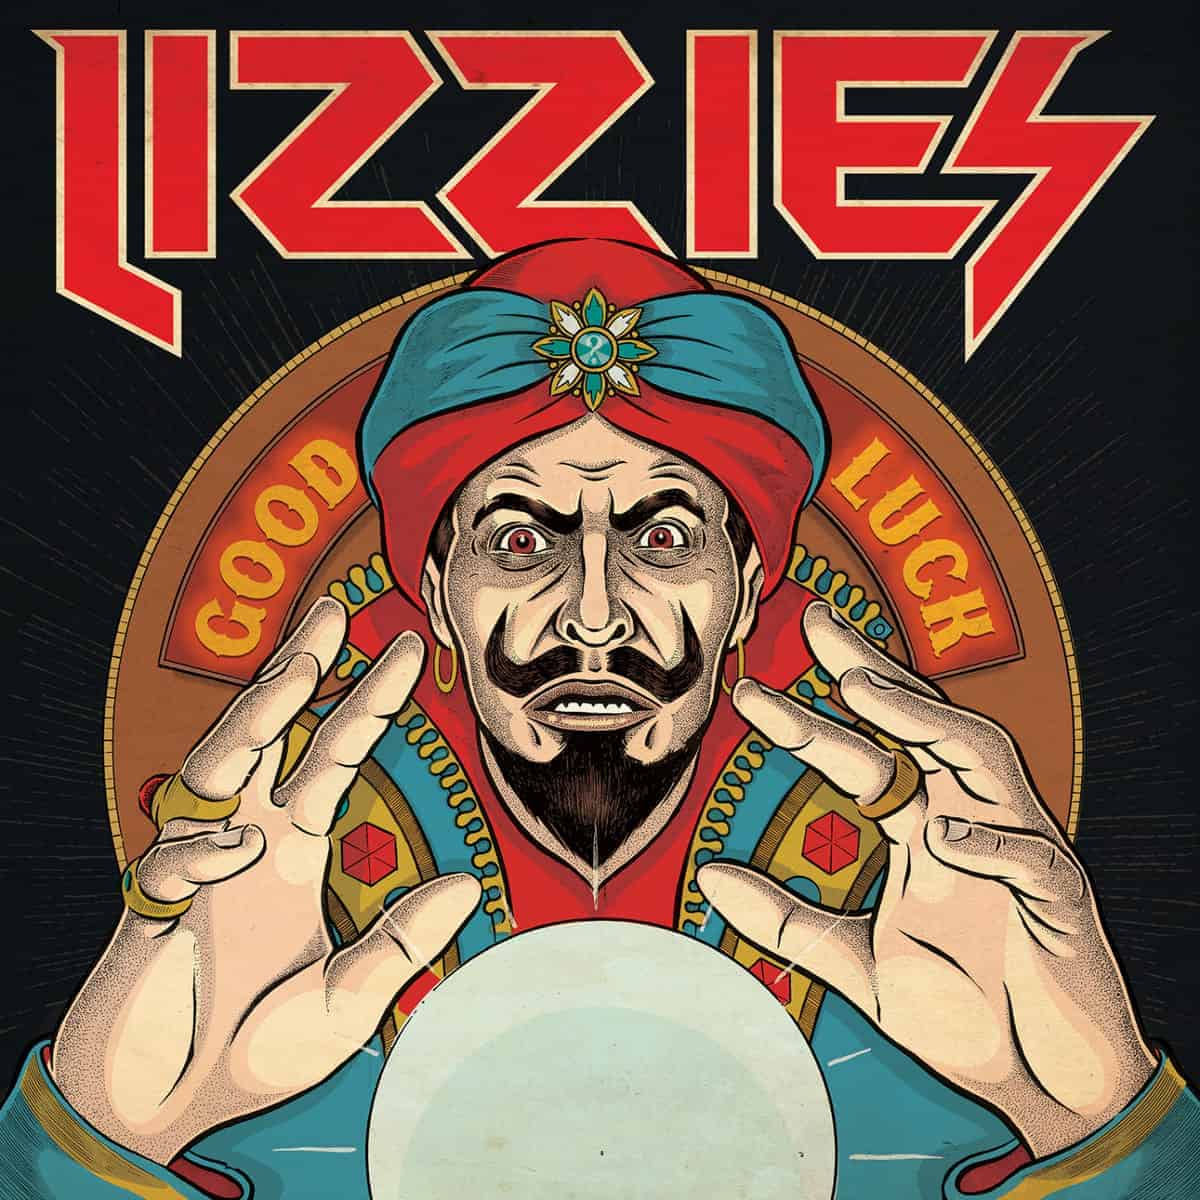 Lizzies - Good Luck LP (The Sign) black vinyl